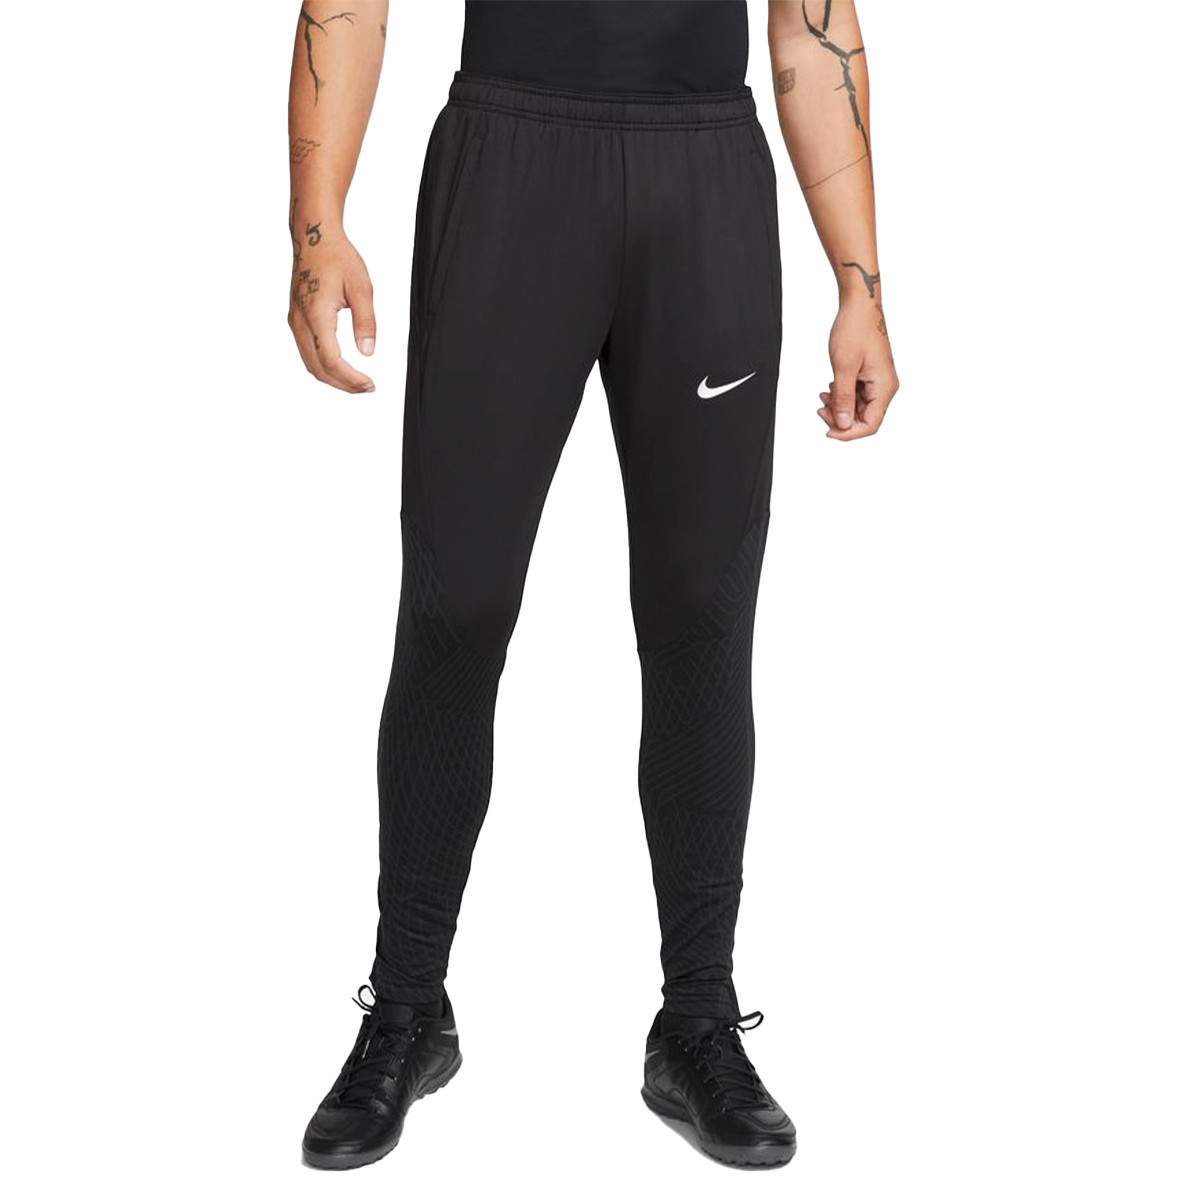 Pantalón largo Nike Dri-Fit Black-Anthracite-Black-White Emotion